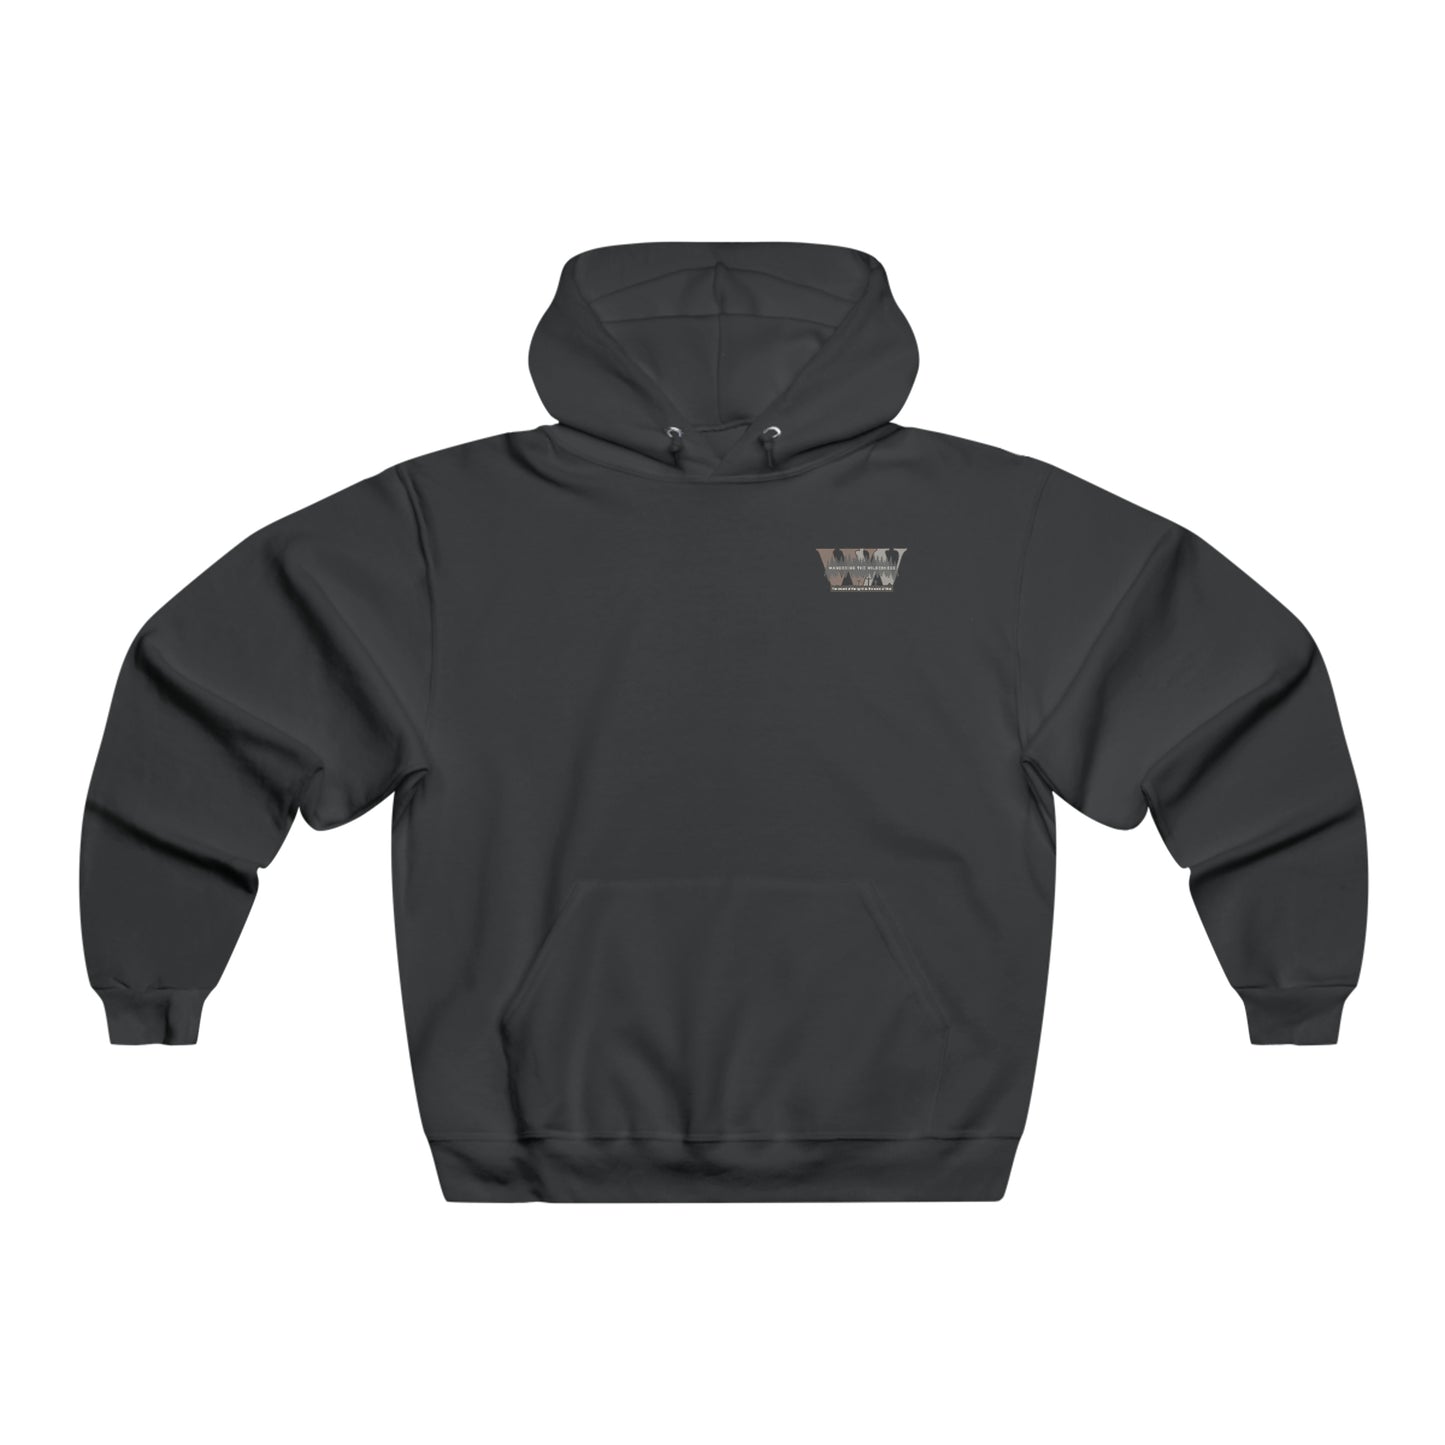 Wandering the Wilderness big logo on the back Men's NUBLEND® Hooded Sweatshirt